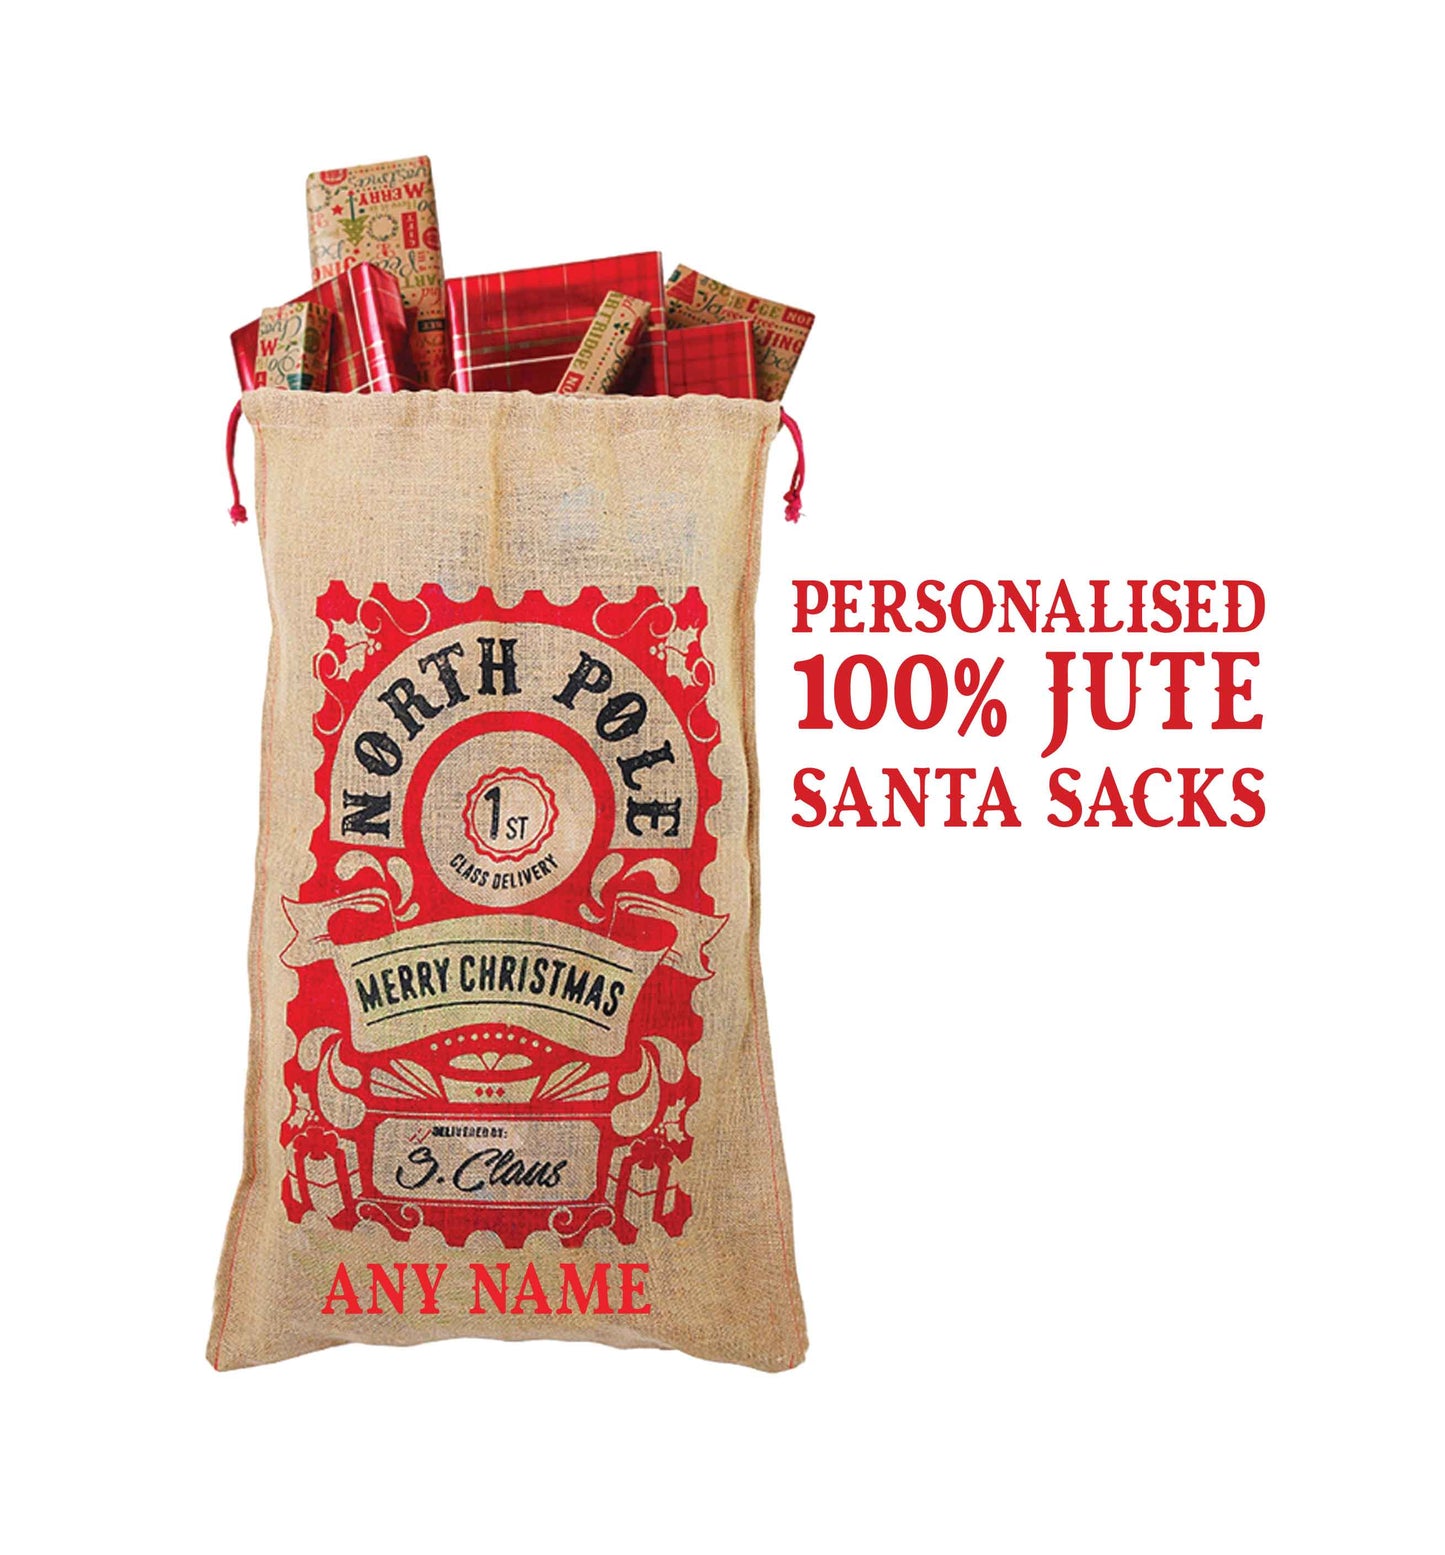 Traditional personalised Santa sack 100% jute hessian style large gift bag